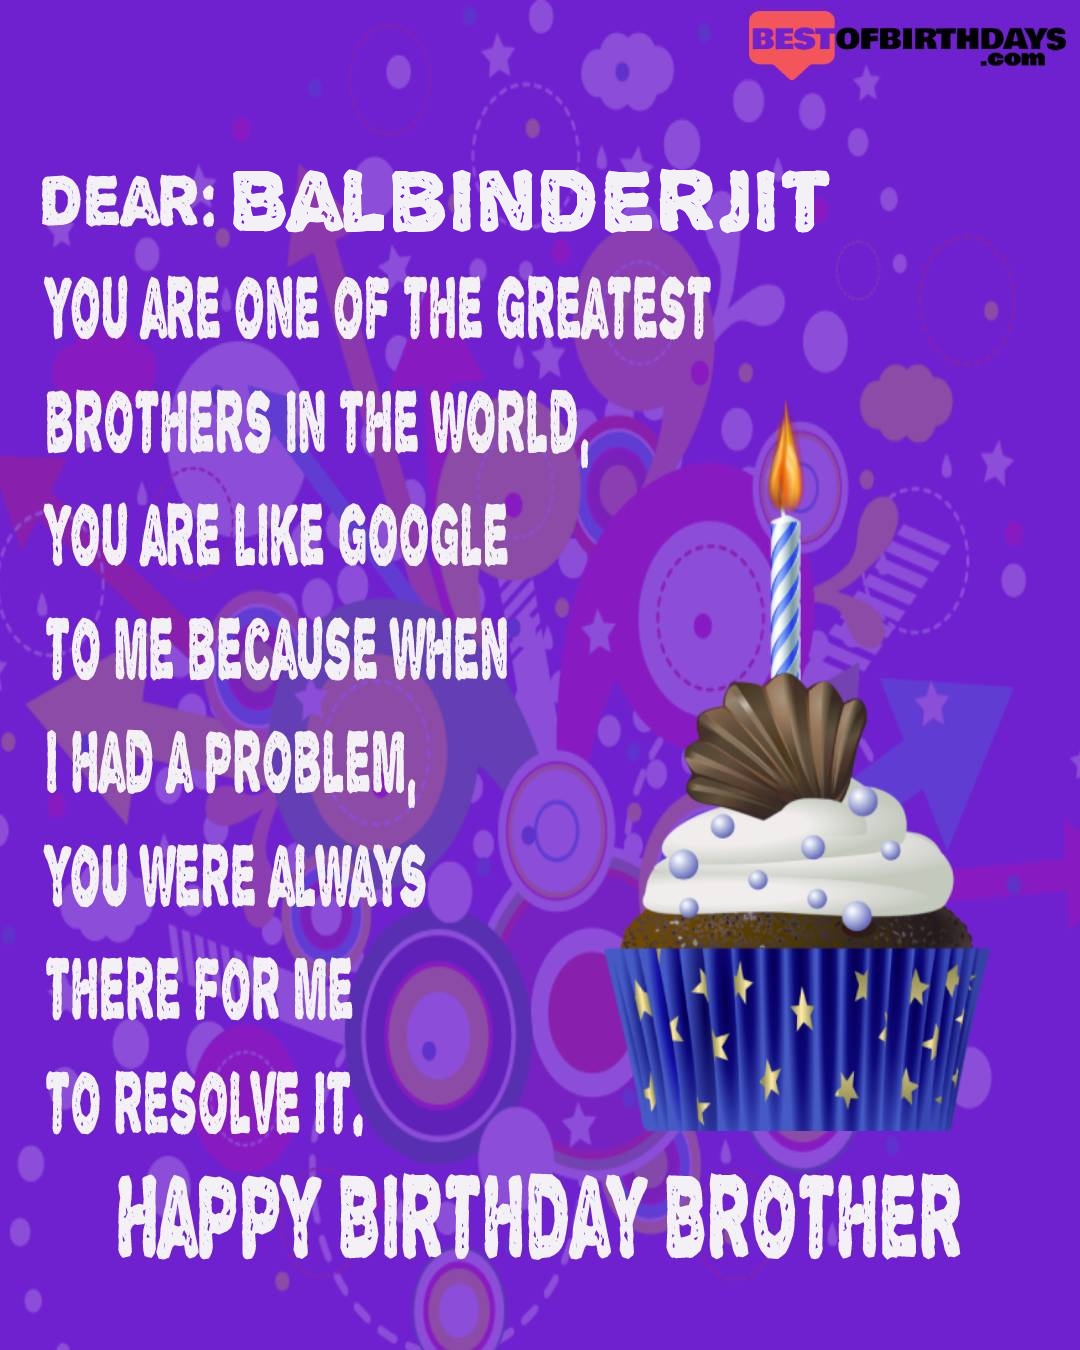 Happy birthday balbinderjit bhai brother bro